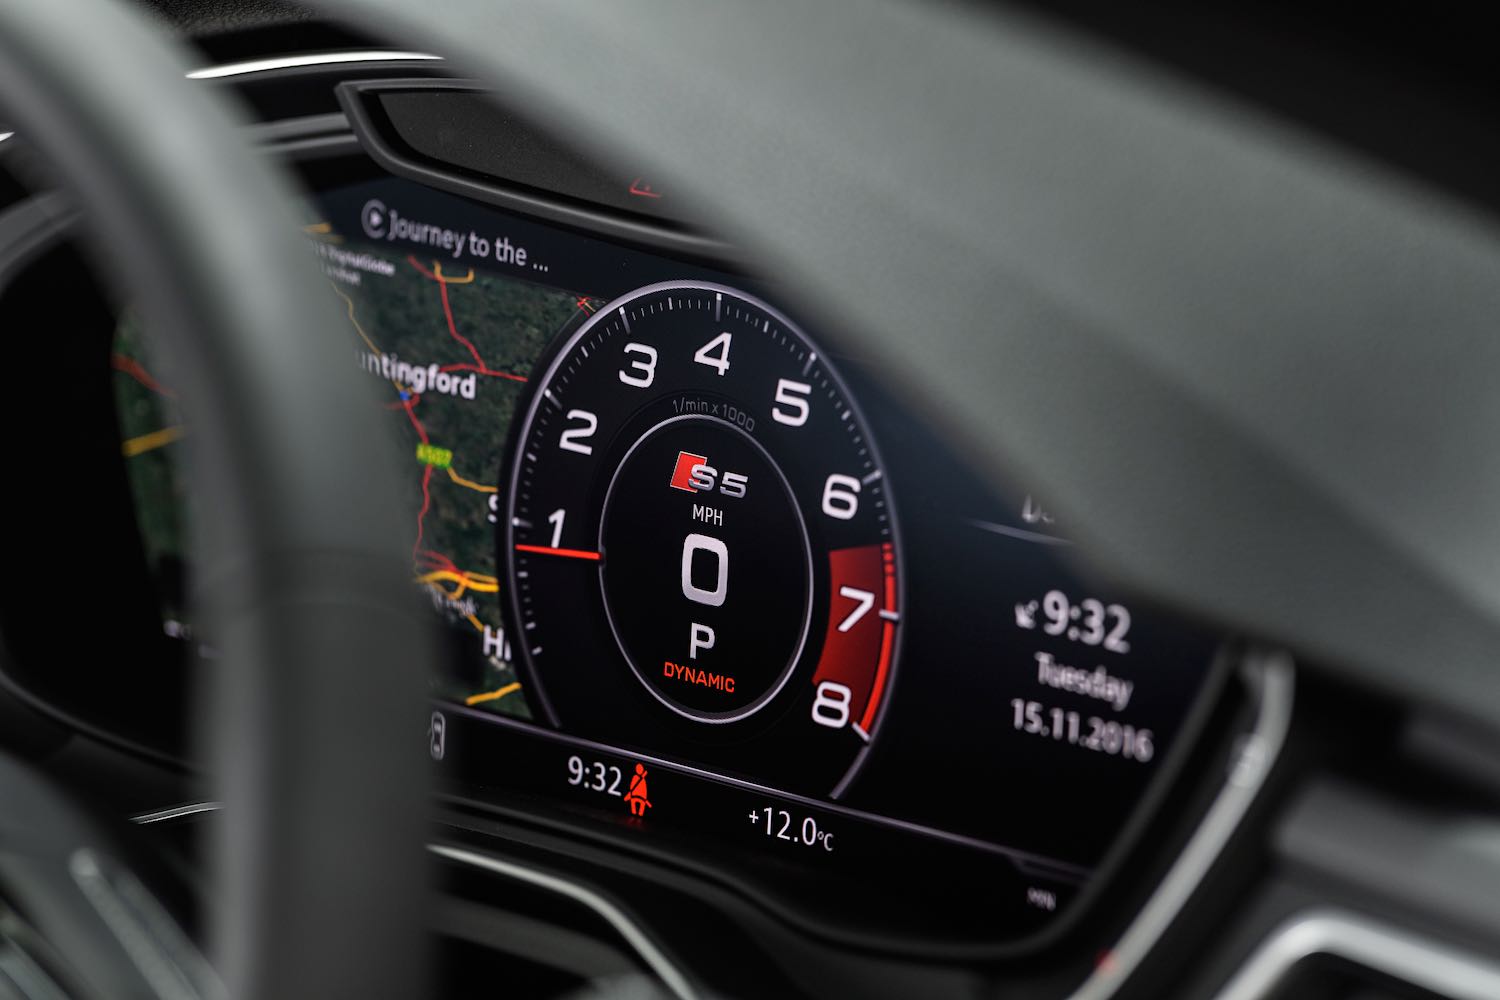 Jonathan Humphrey reviews the Audi S5 Sportback for Drive.co.uk-18